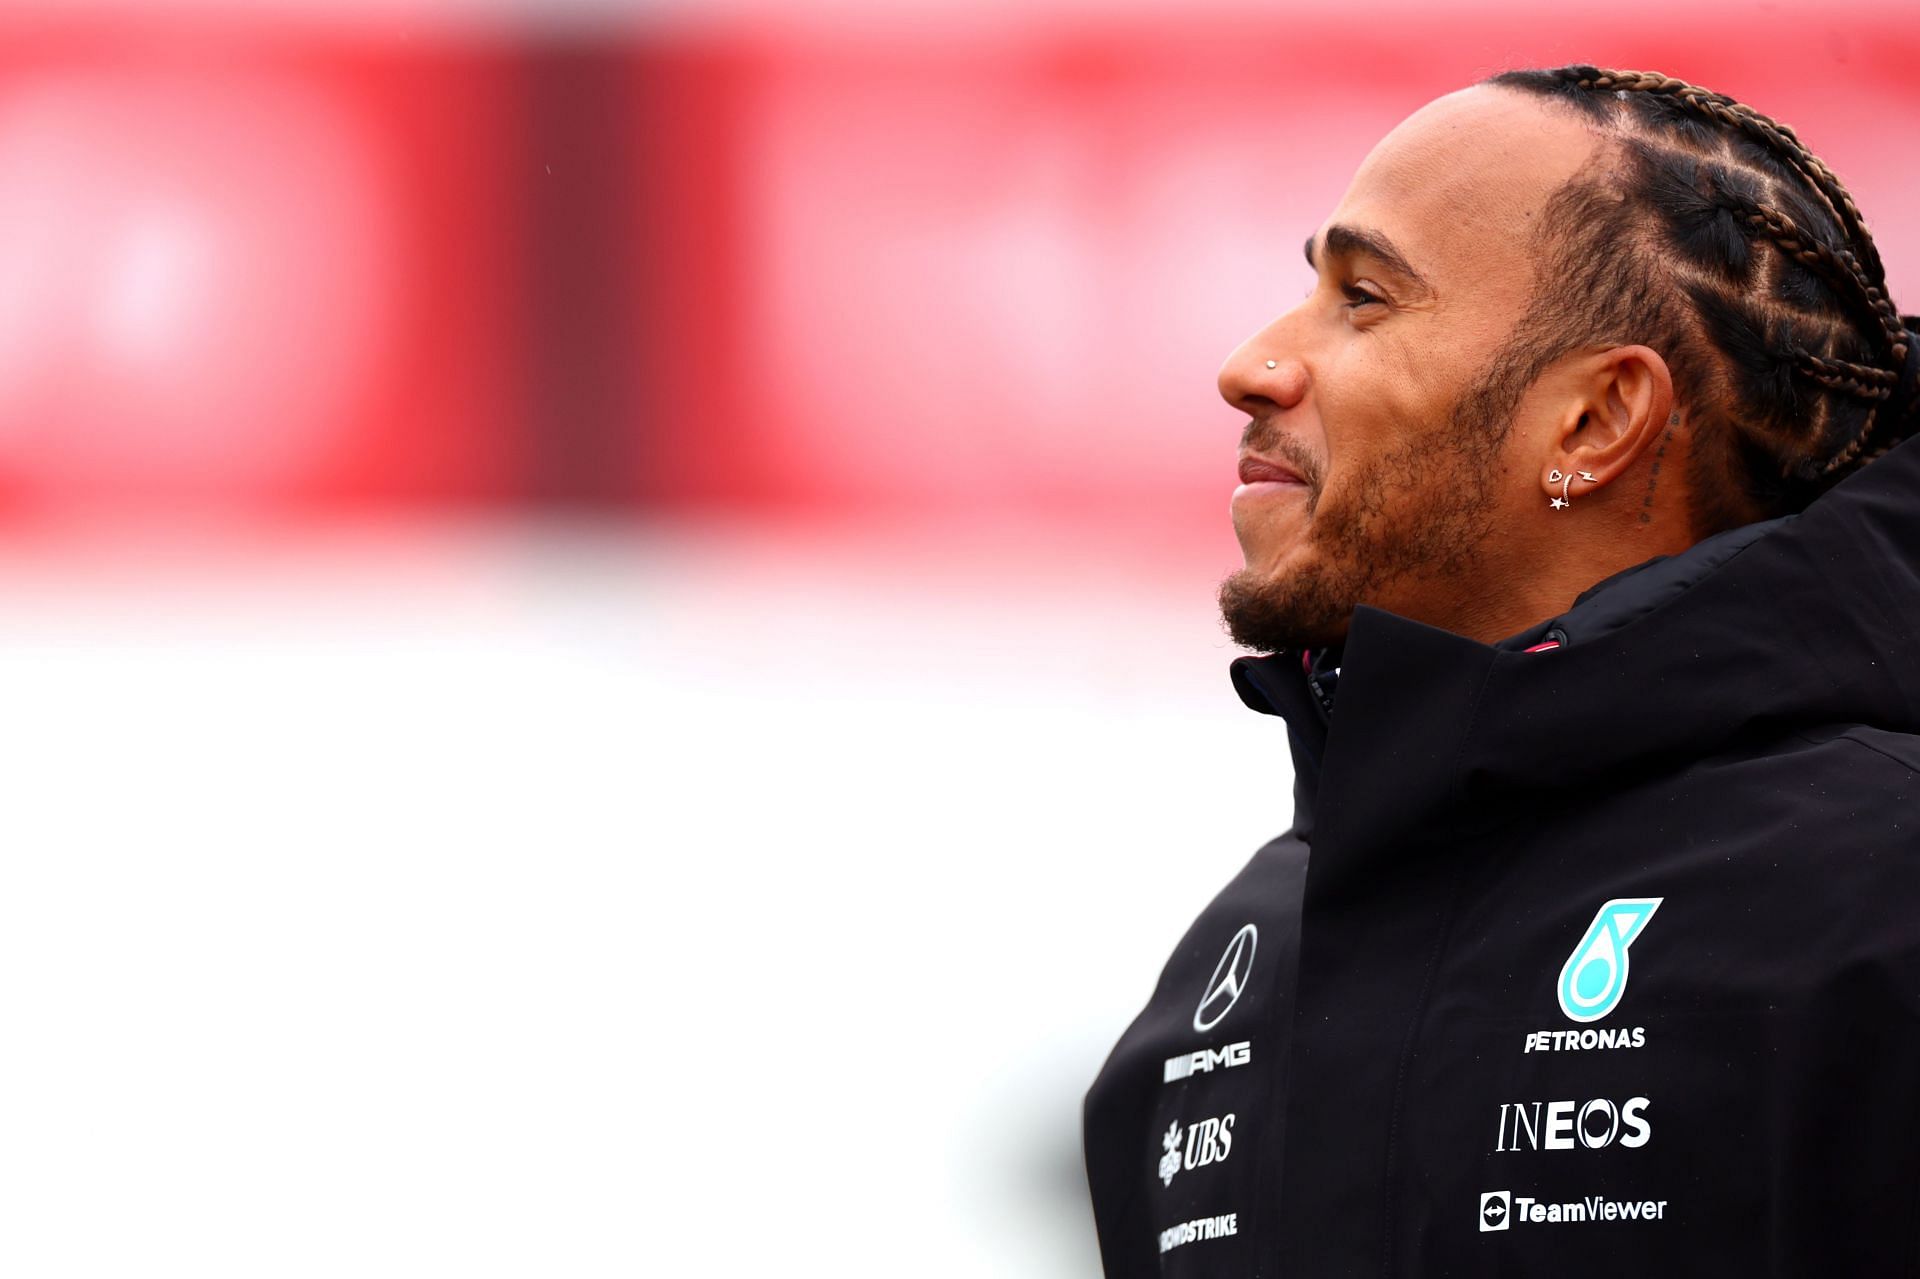 The spotlight will be on Lewis Hamilton at the 2022 F1 British GP